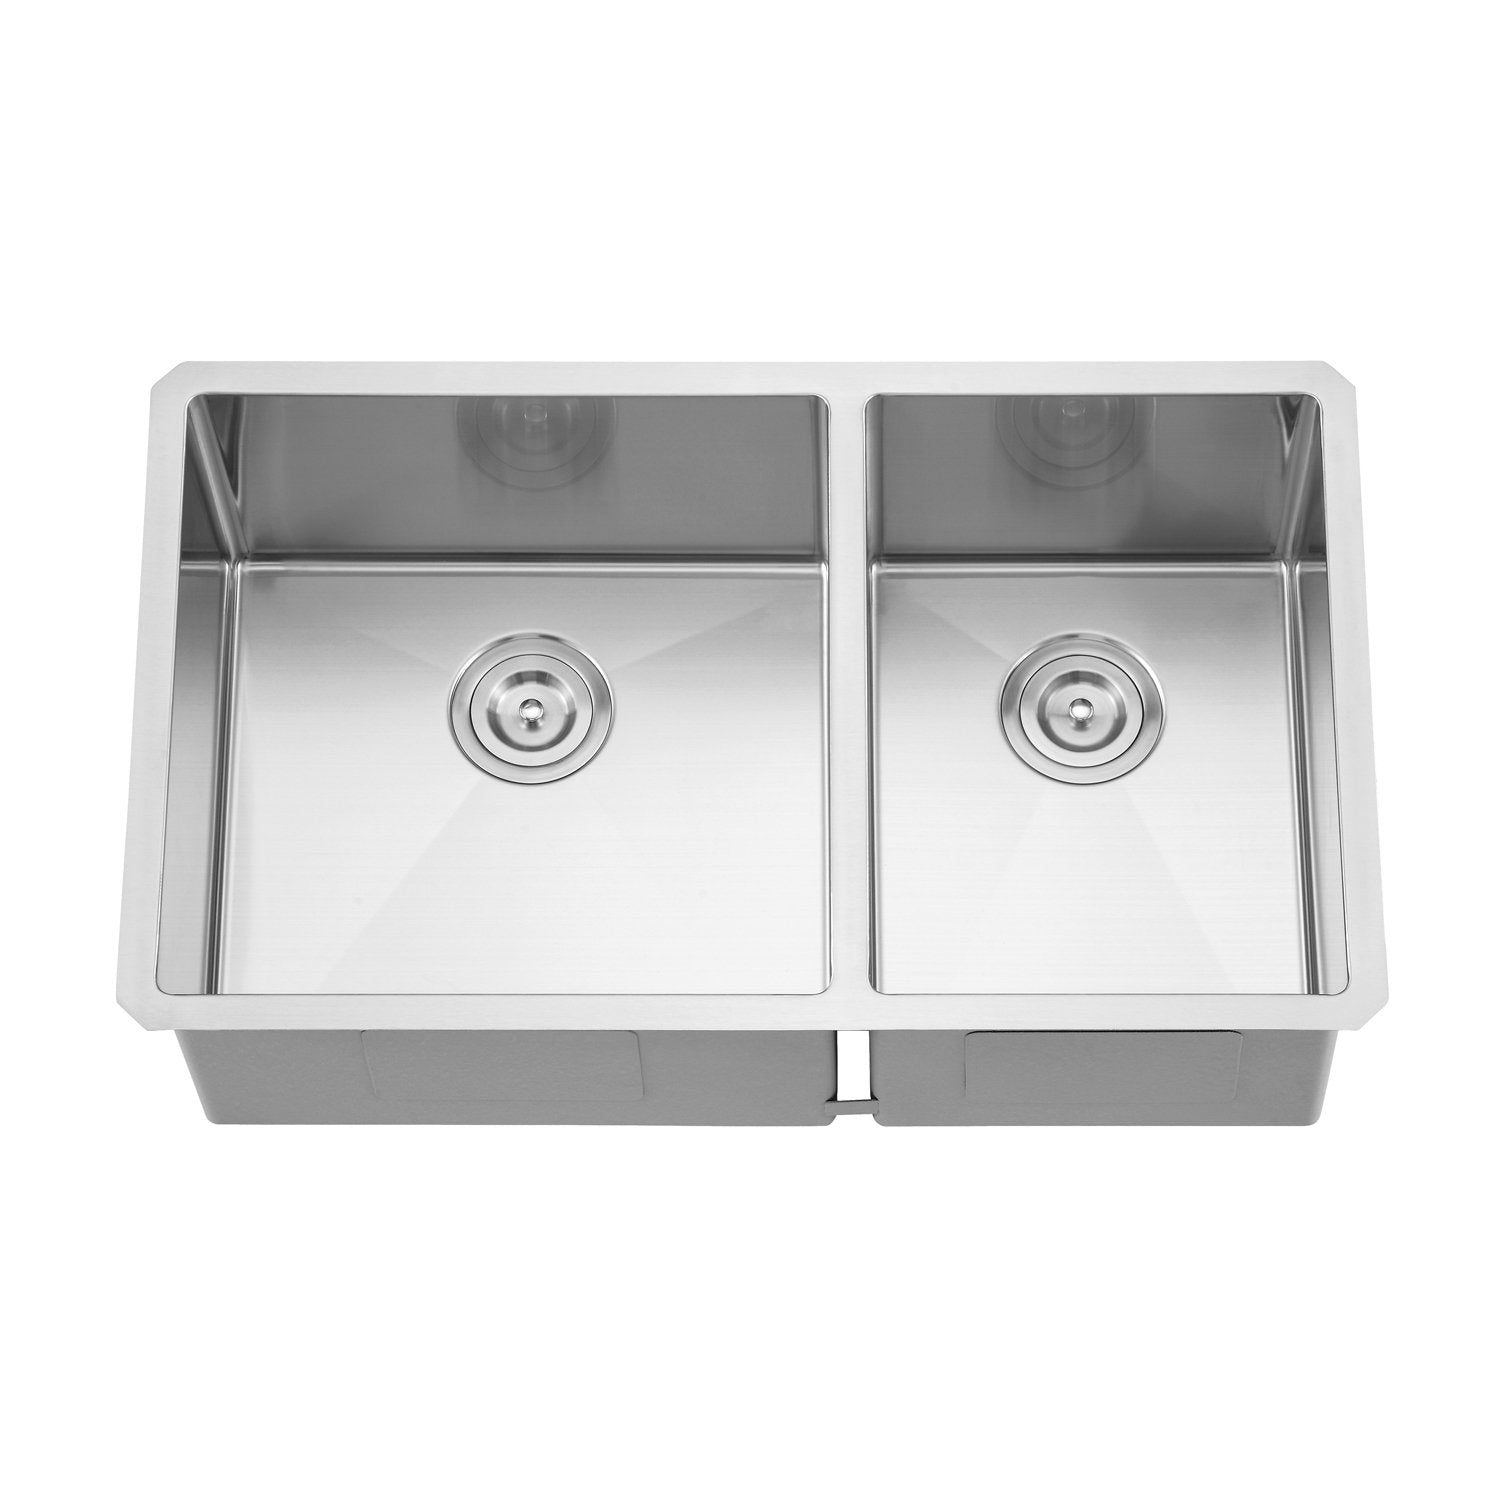 DAX Handmade 60/40 Double Bowl Undermount Kitchen Sink, 18 Gauge Stainless Steel, Brushed Finish, 32 x 19 x 10 Inches (DAX-3219LR10)